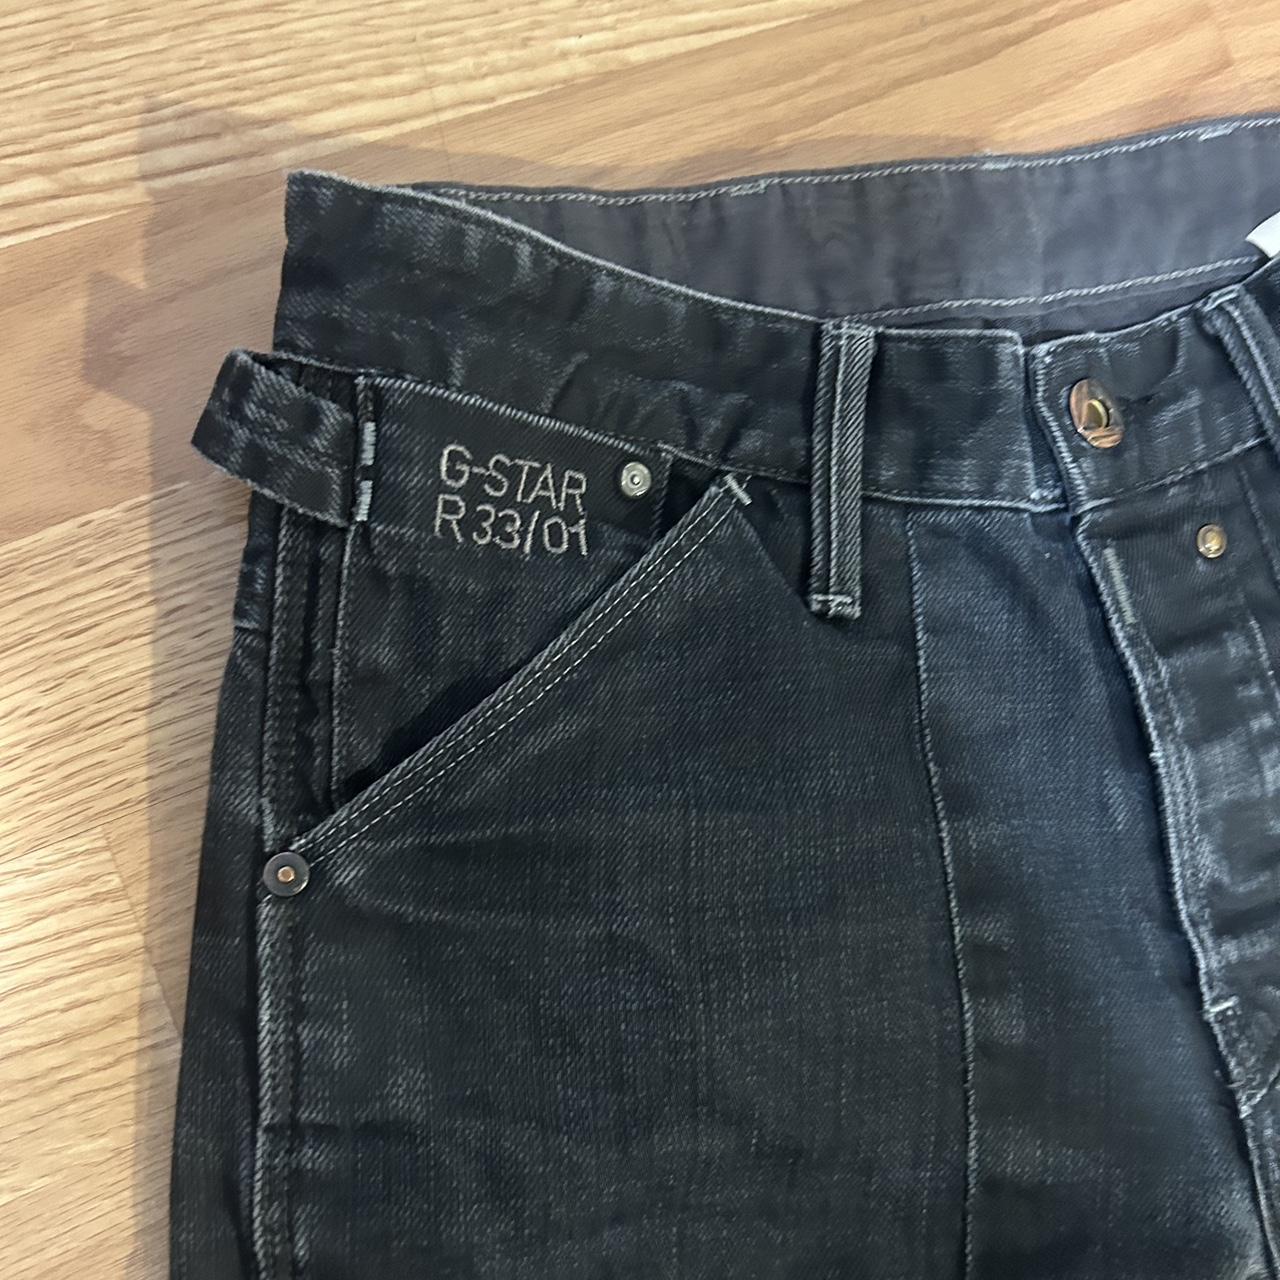 black G-Star RAW r33/01 jeans, light use - Depop